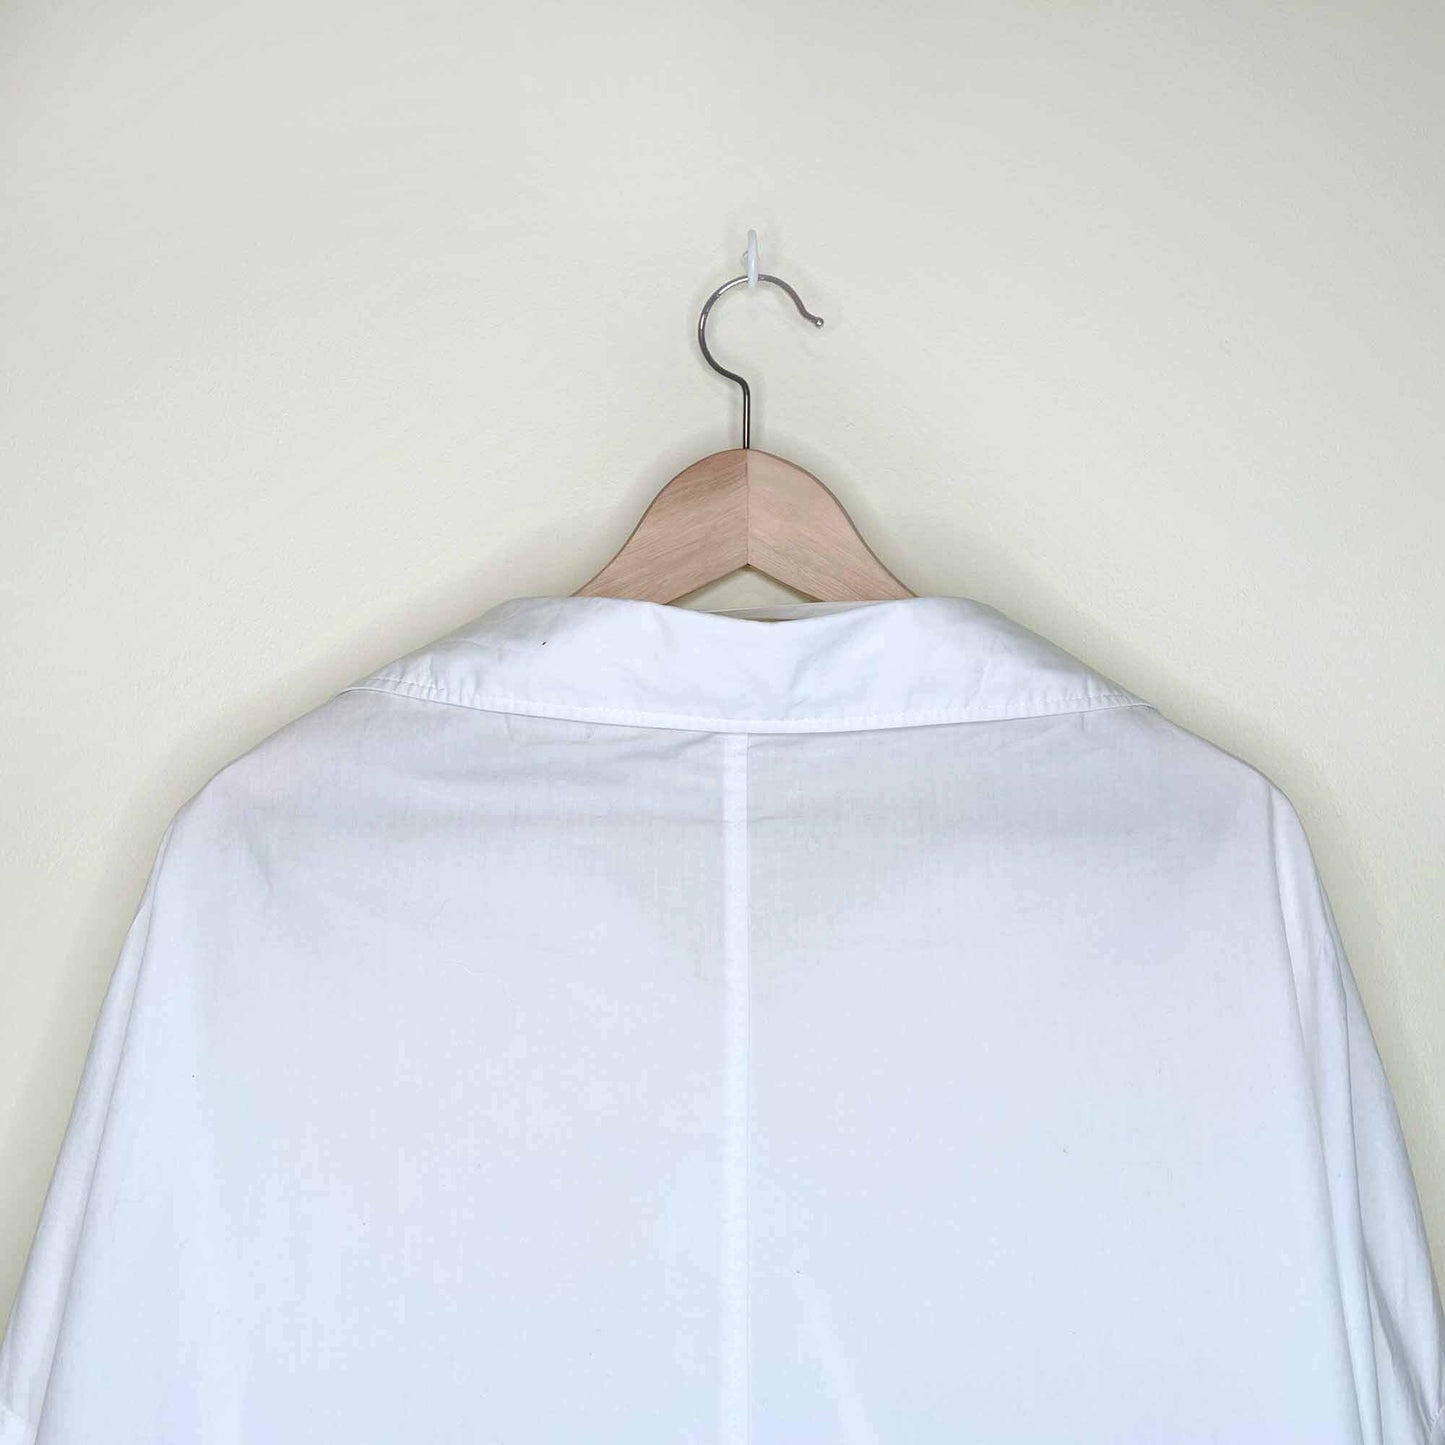 zara oversized white button down dress shirt - size small